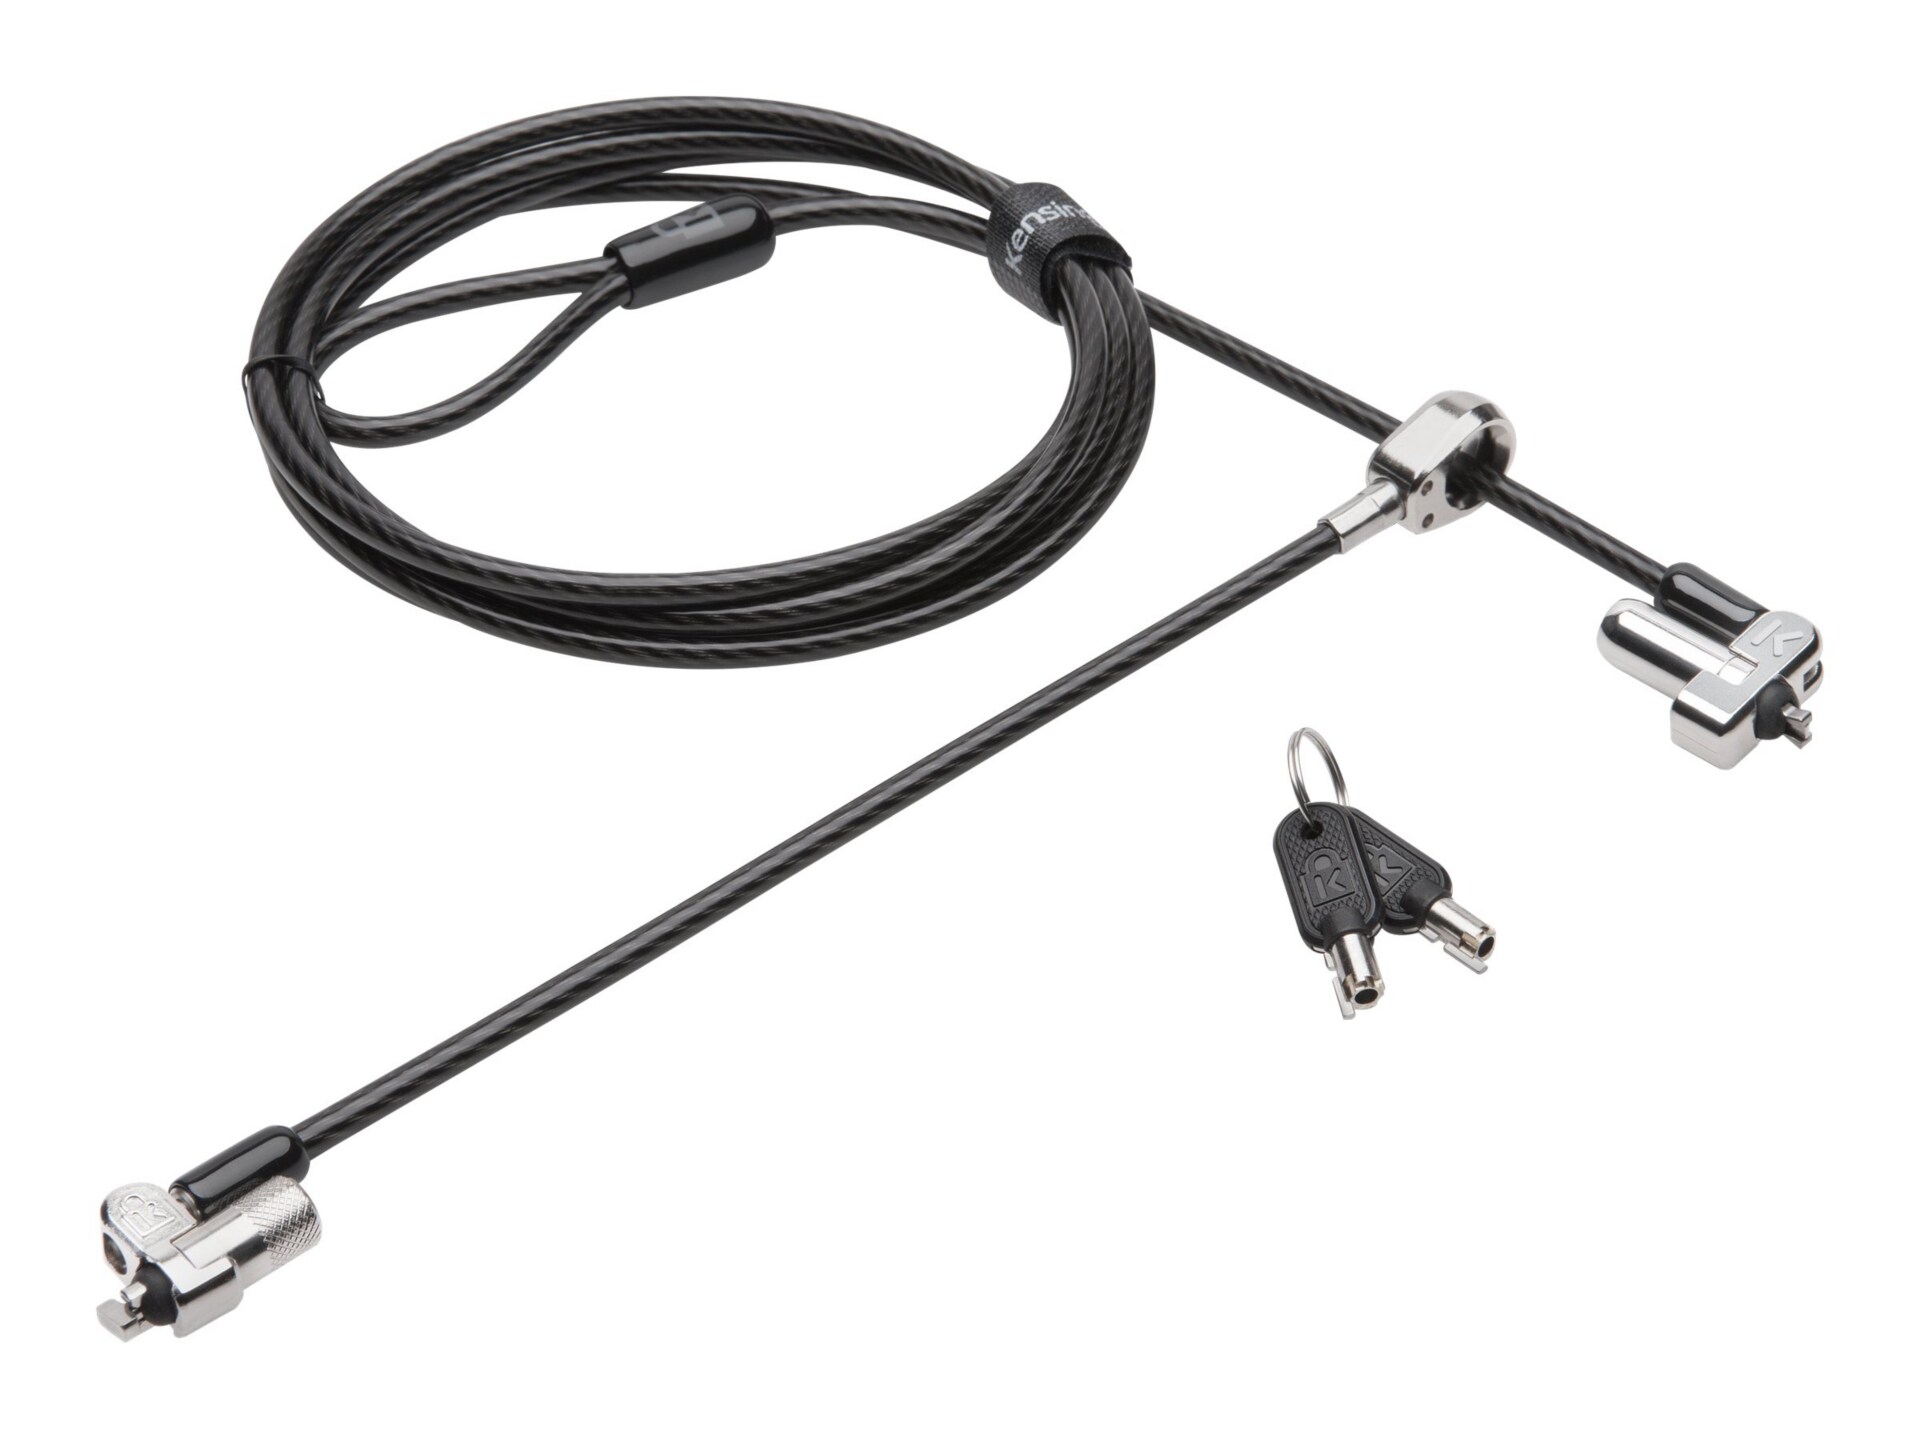 Kensington N17 Keyed Dual Head Laptop Lock for Wedge Shaped Slots - security cable lock